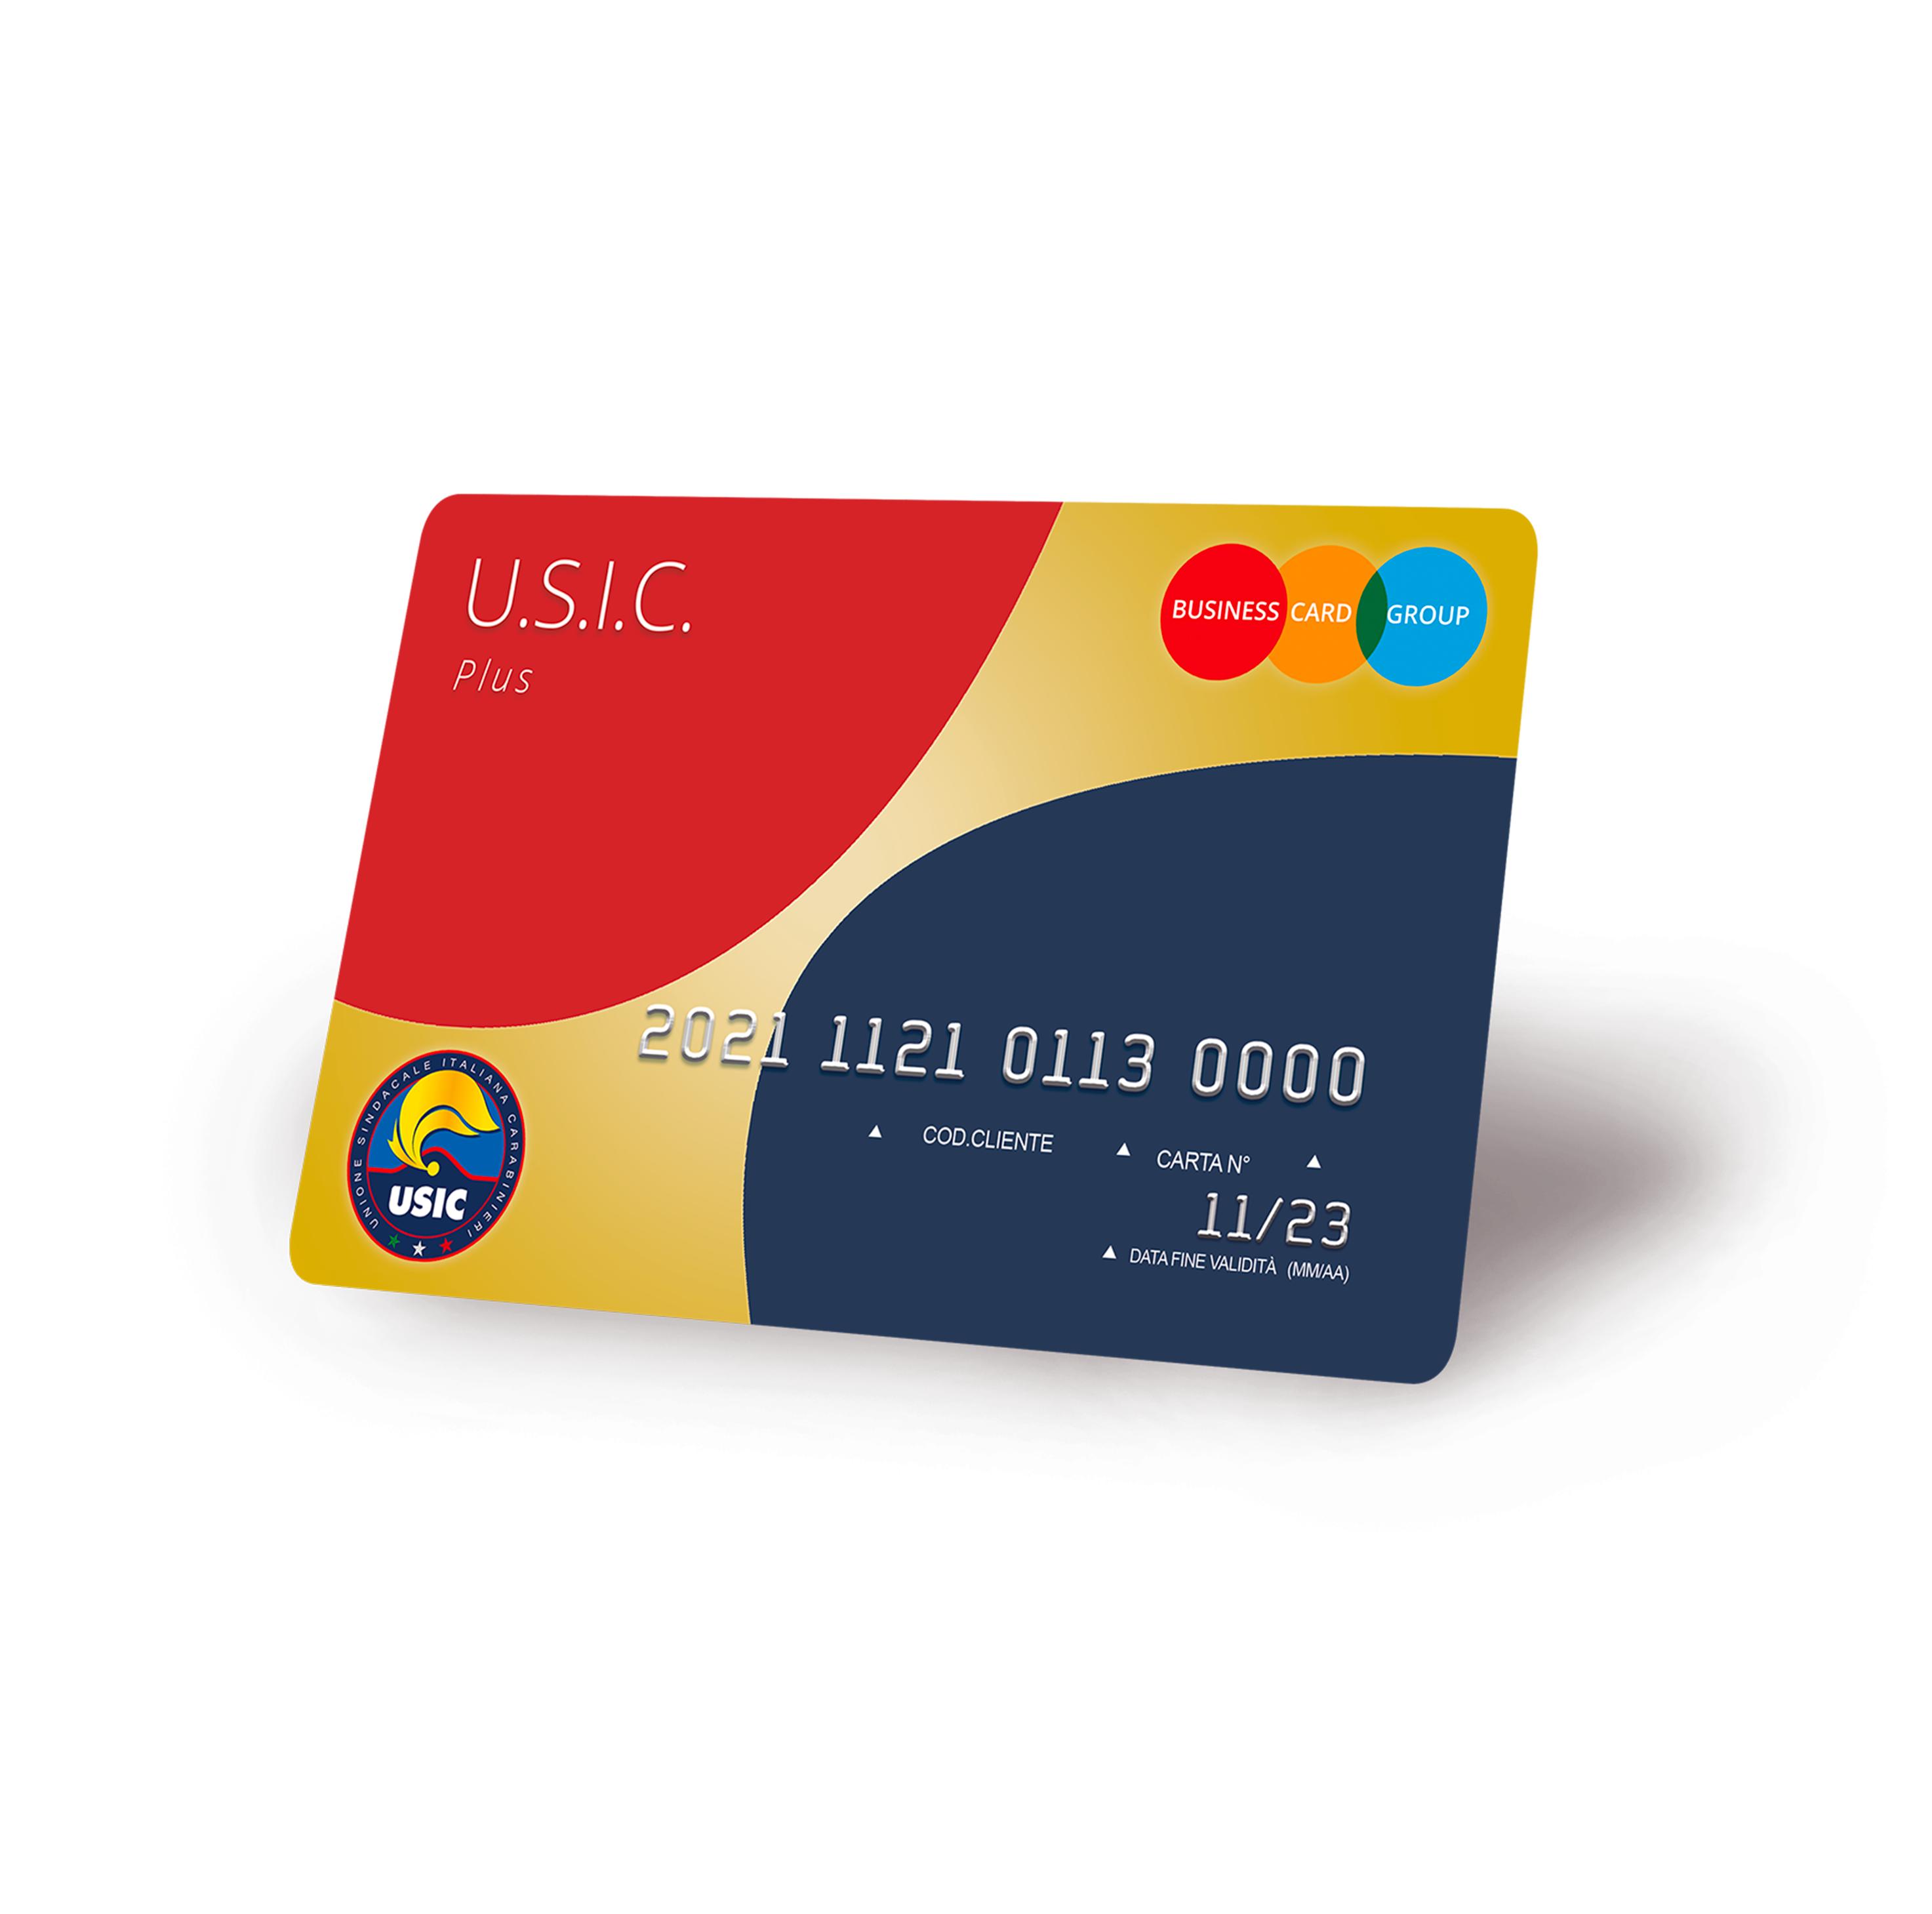 Business Card U.S.I.C. - Plus